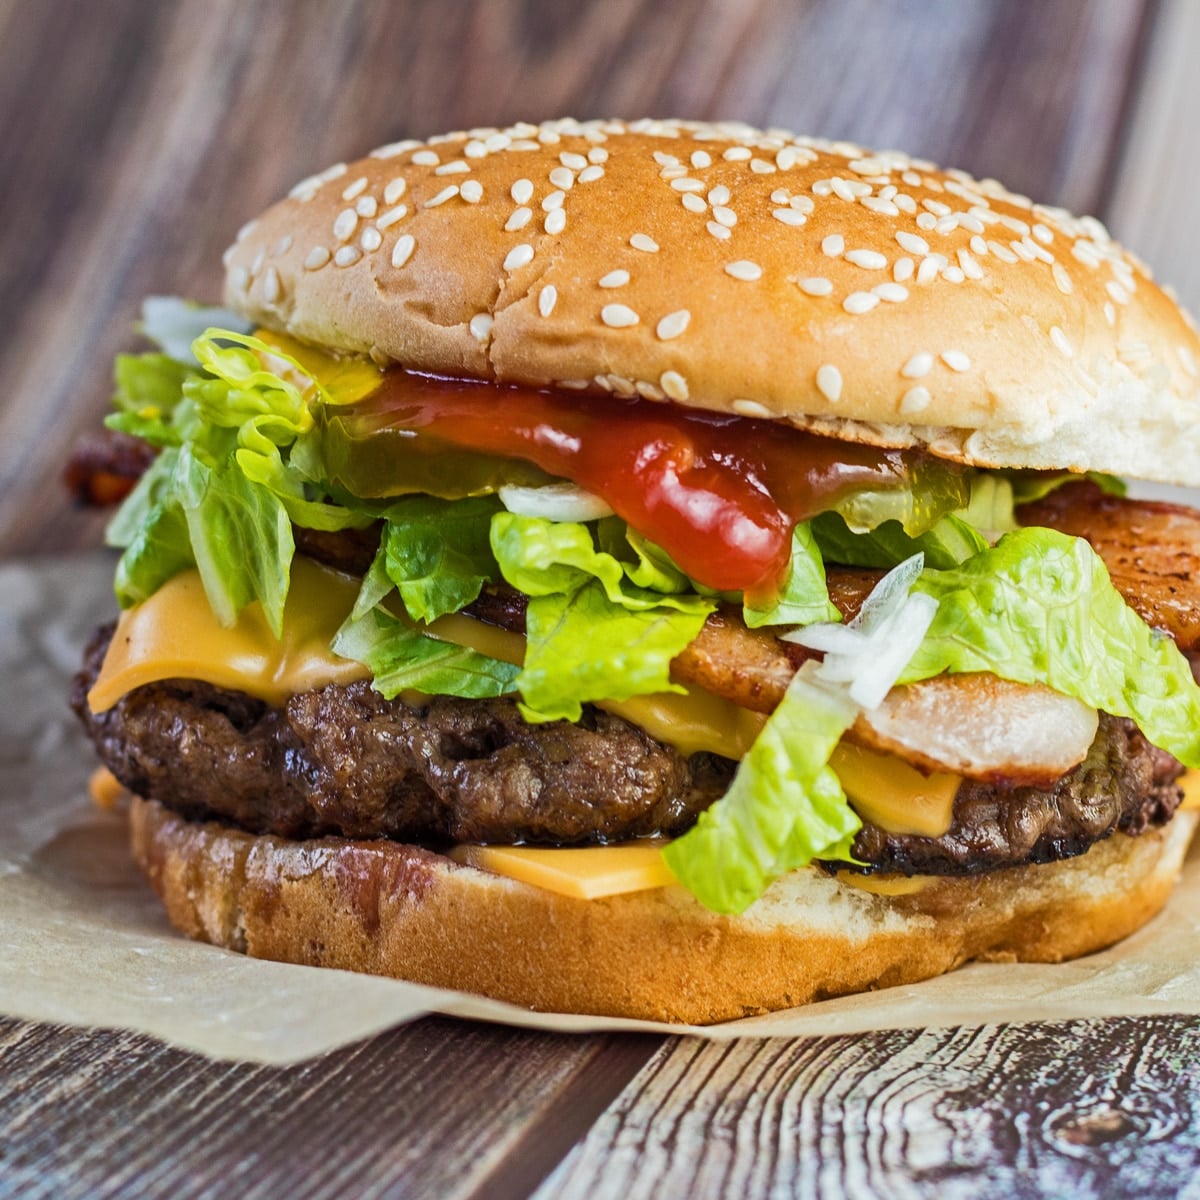 Vierkant beeld van cheeseburger met sla.